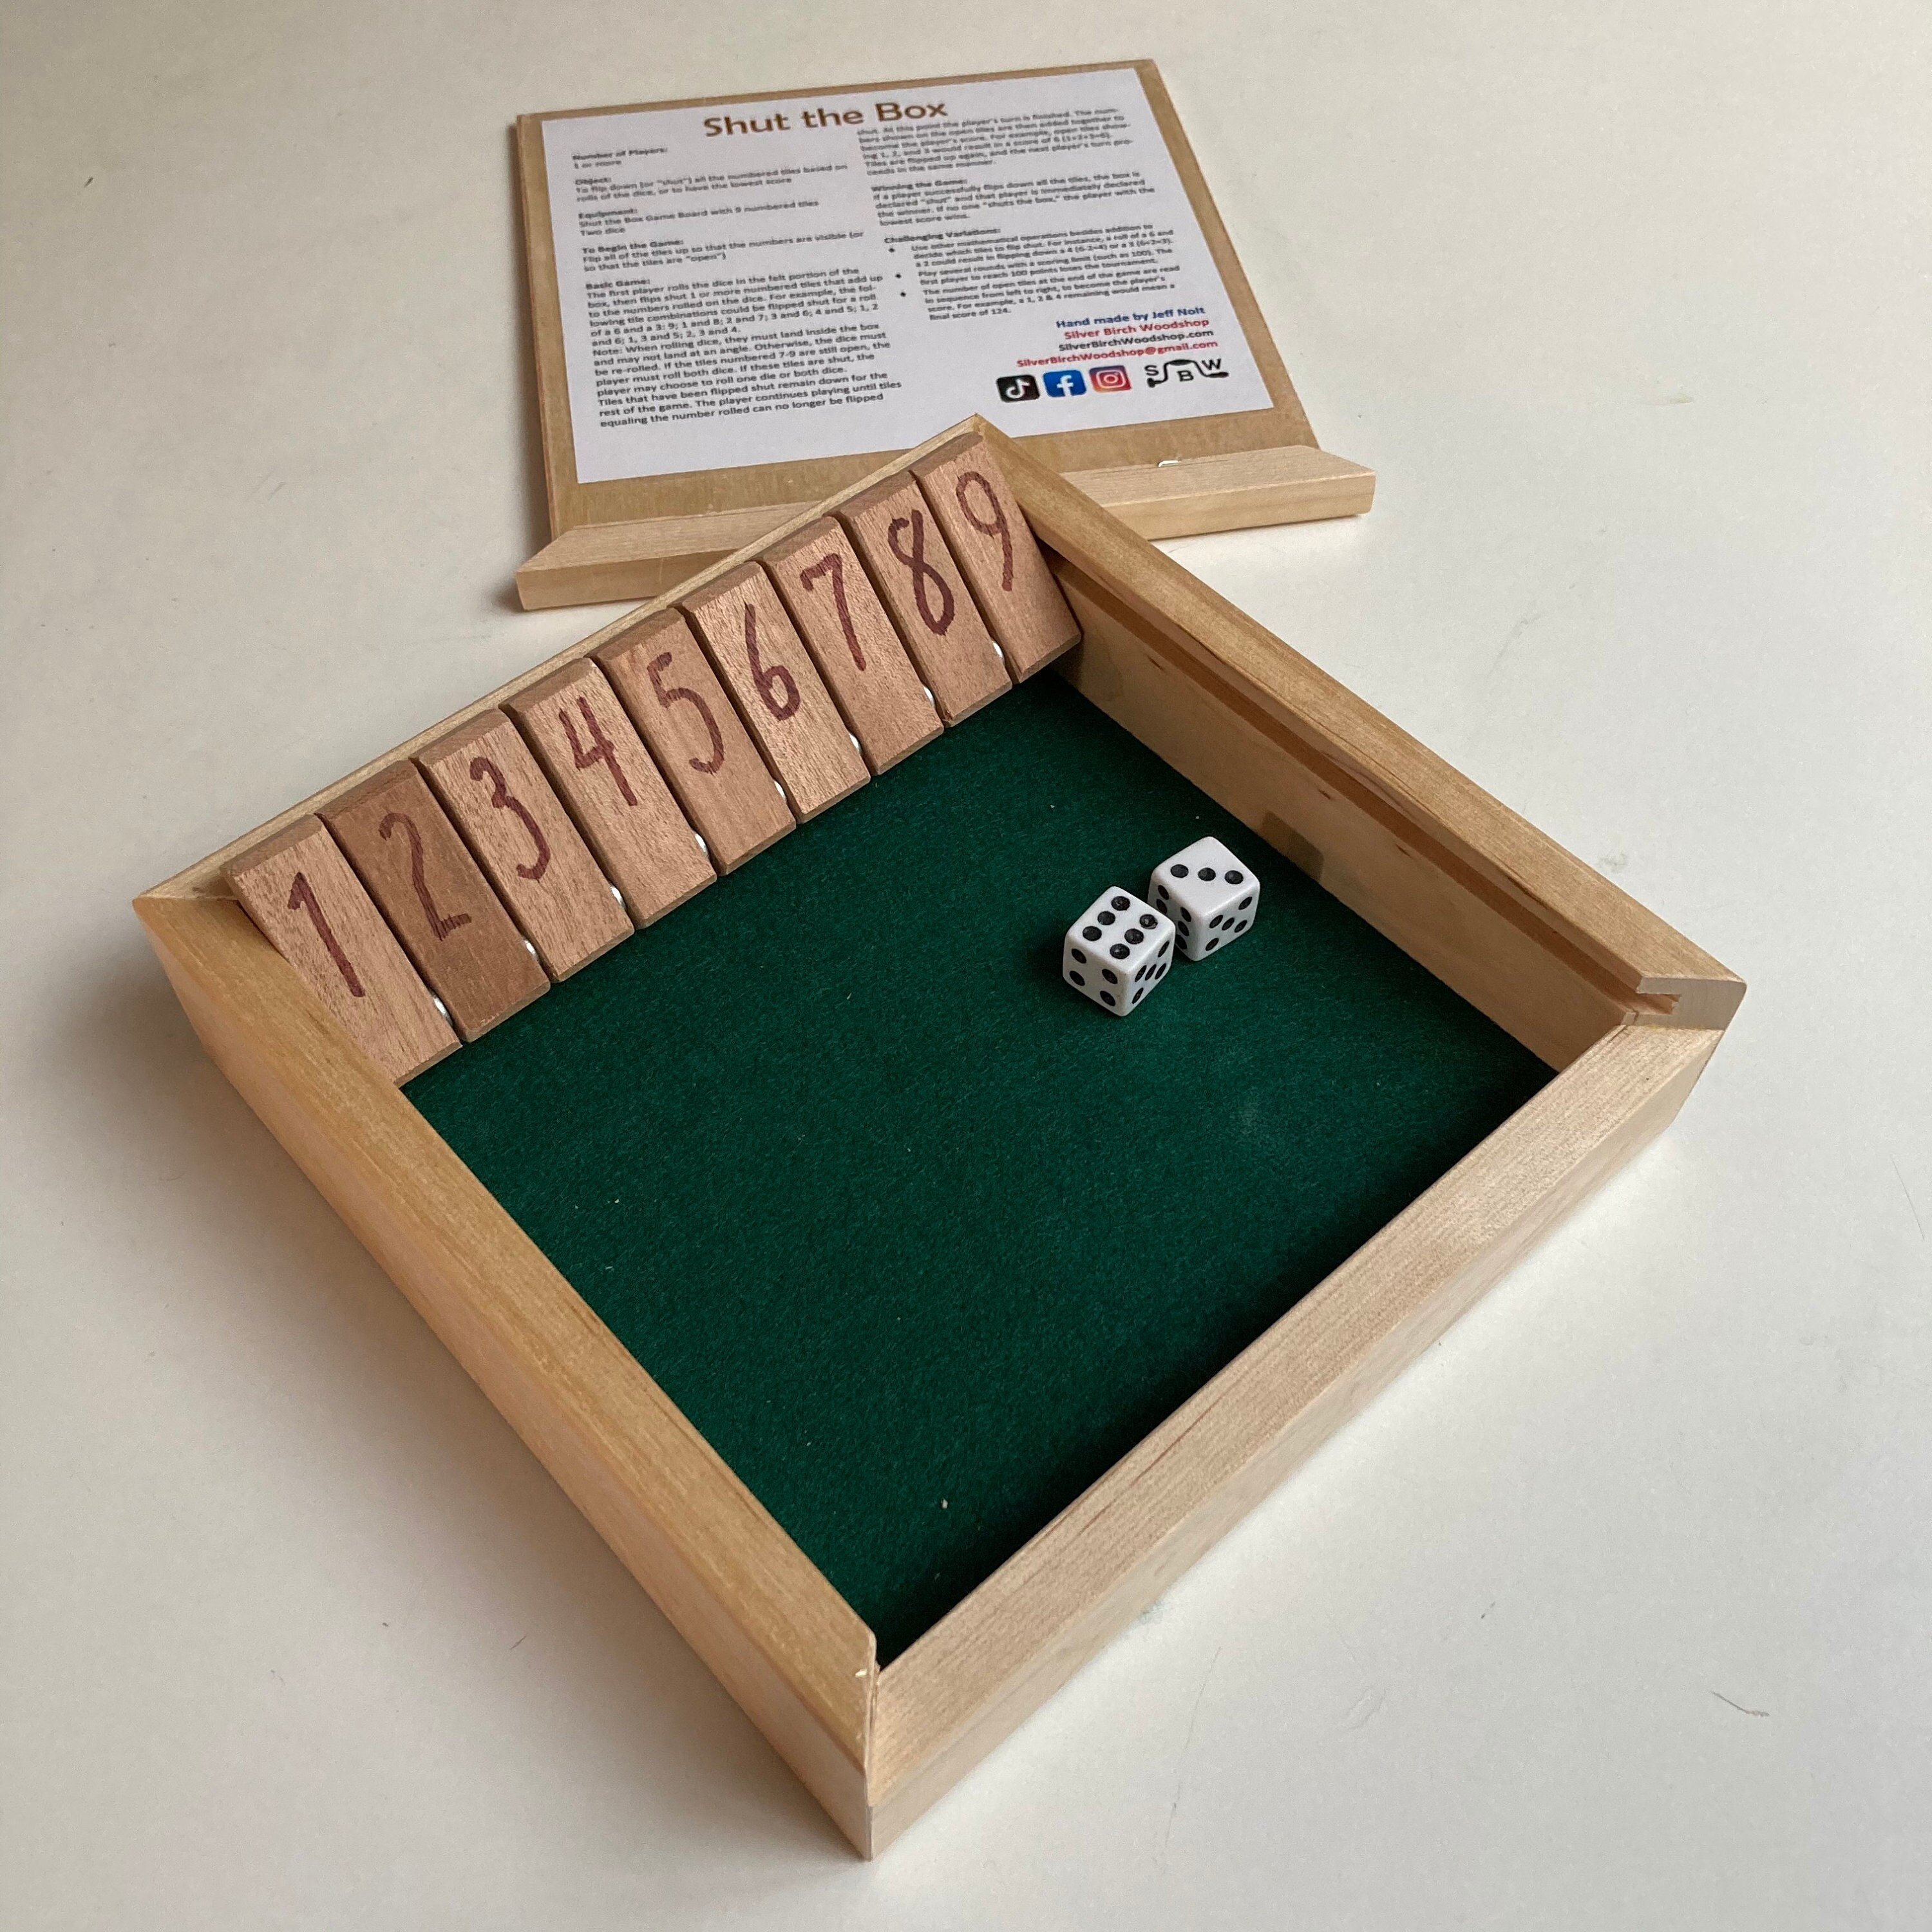 Shut the Box Dice Game Handmade Wooden Game Math Related Game -  Ireland